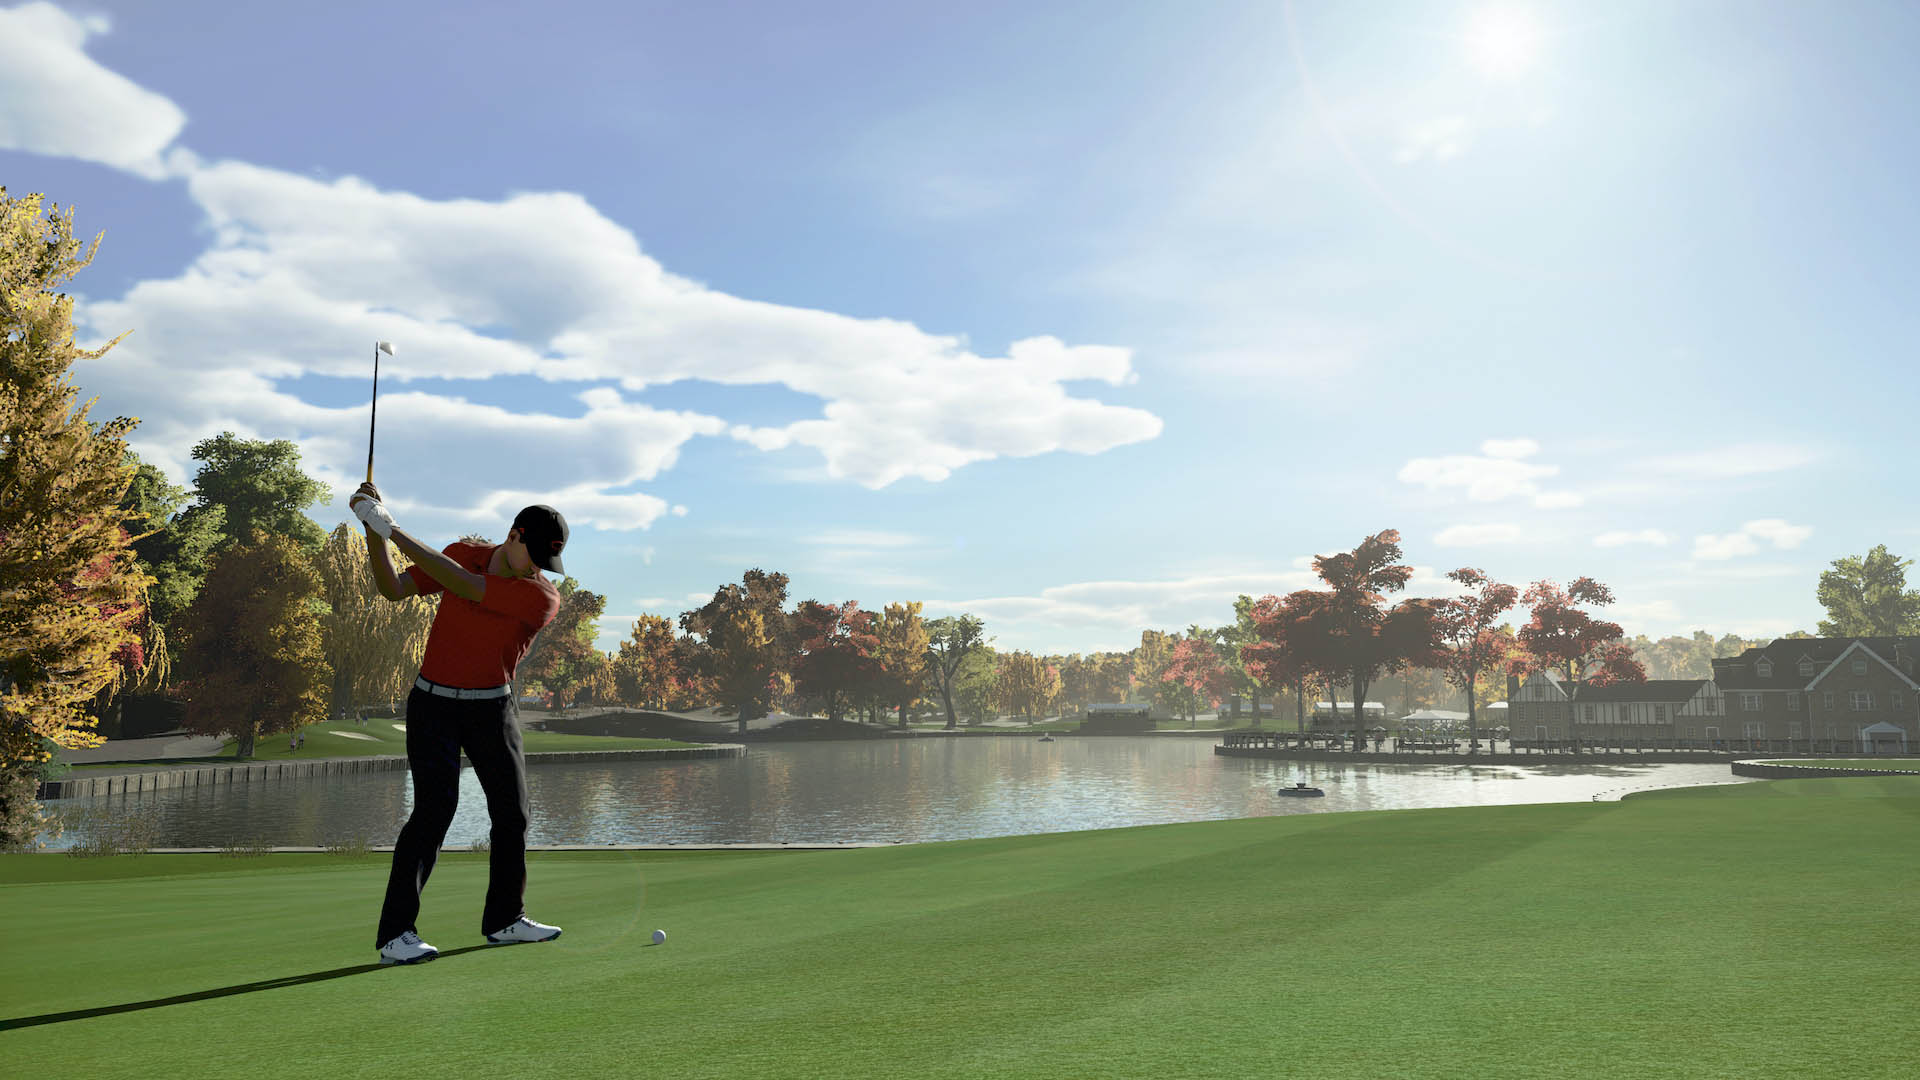 2Kの新作ゴルフゲーム「ゴルフ PGAツアー 2K21」の発売日が8月21日に決定